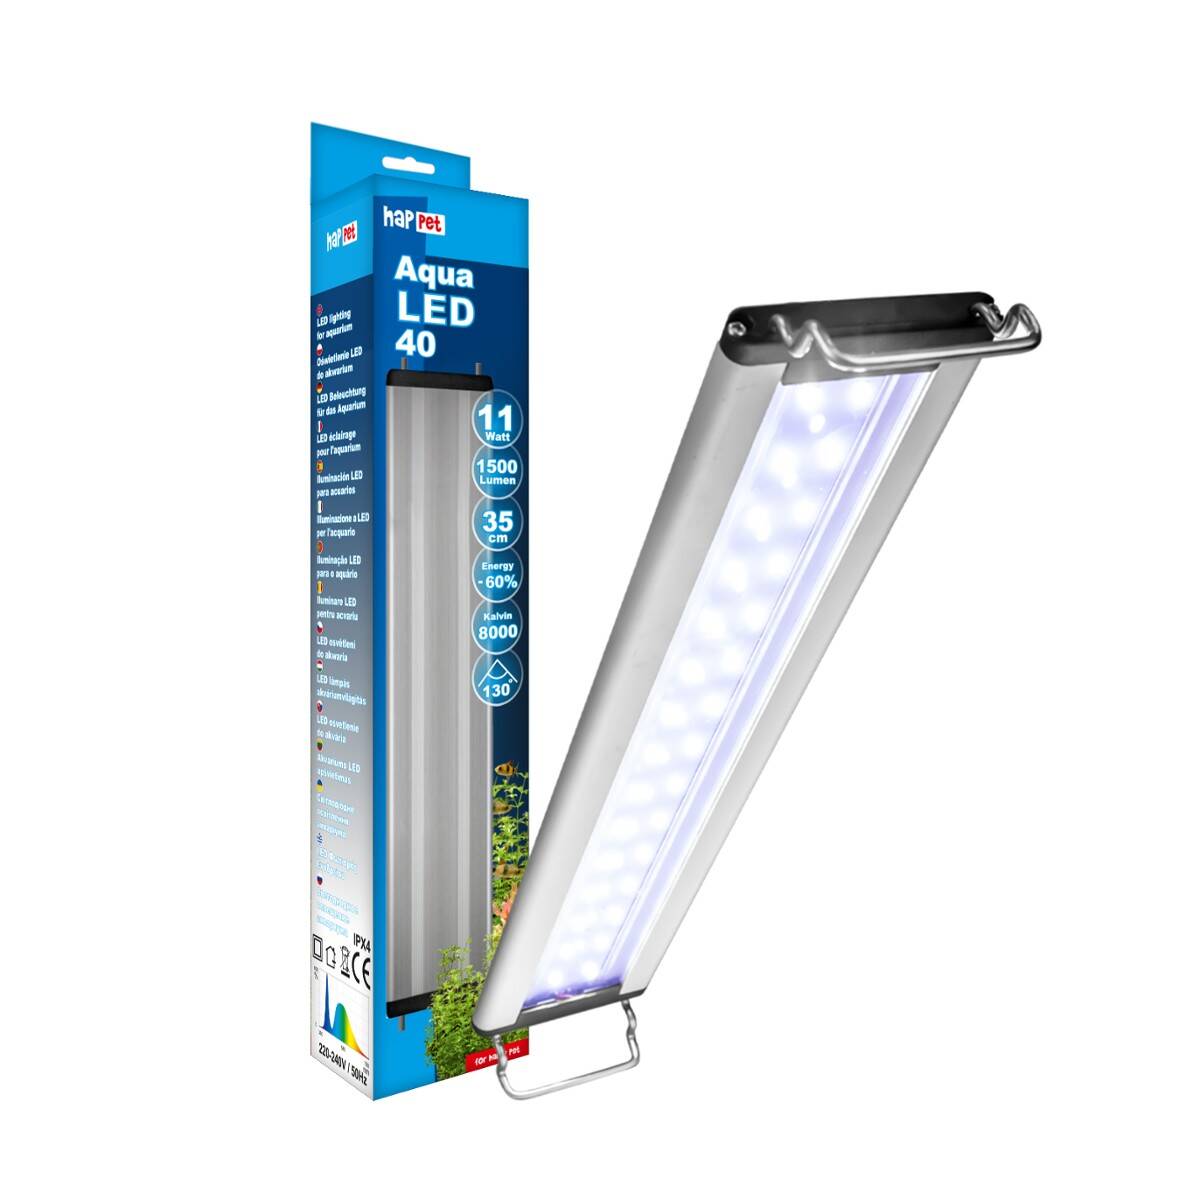 LED-Lampe für Aquarien - AquaLED Happet 56cm (S-LB24JW)